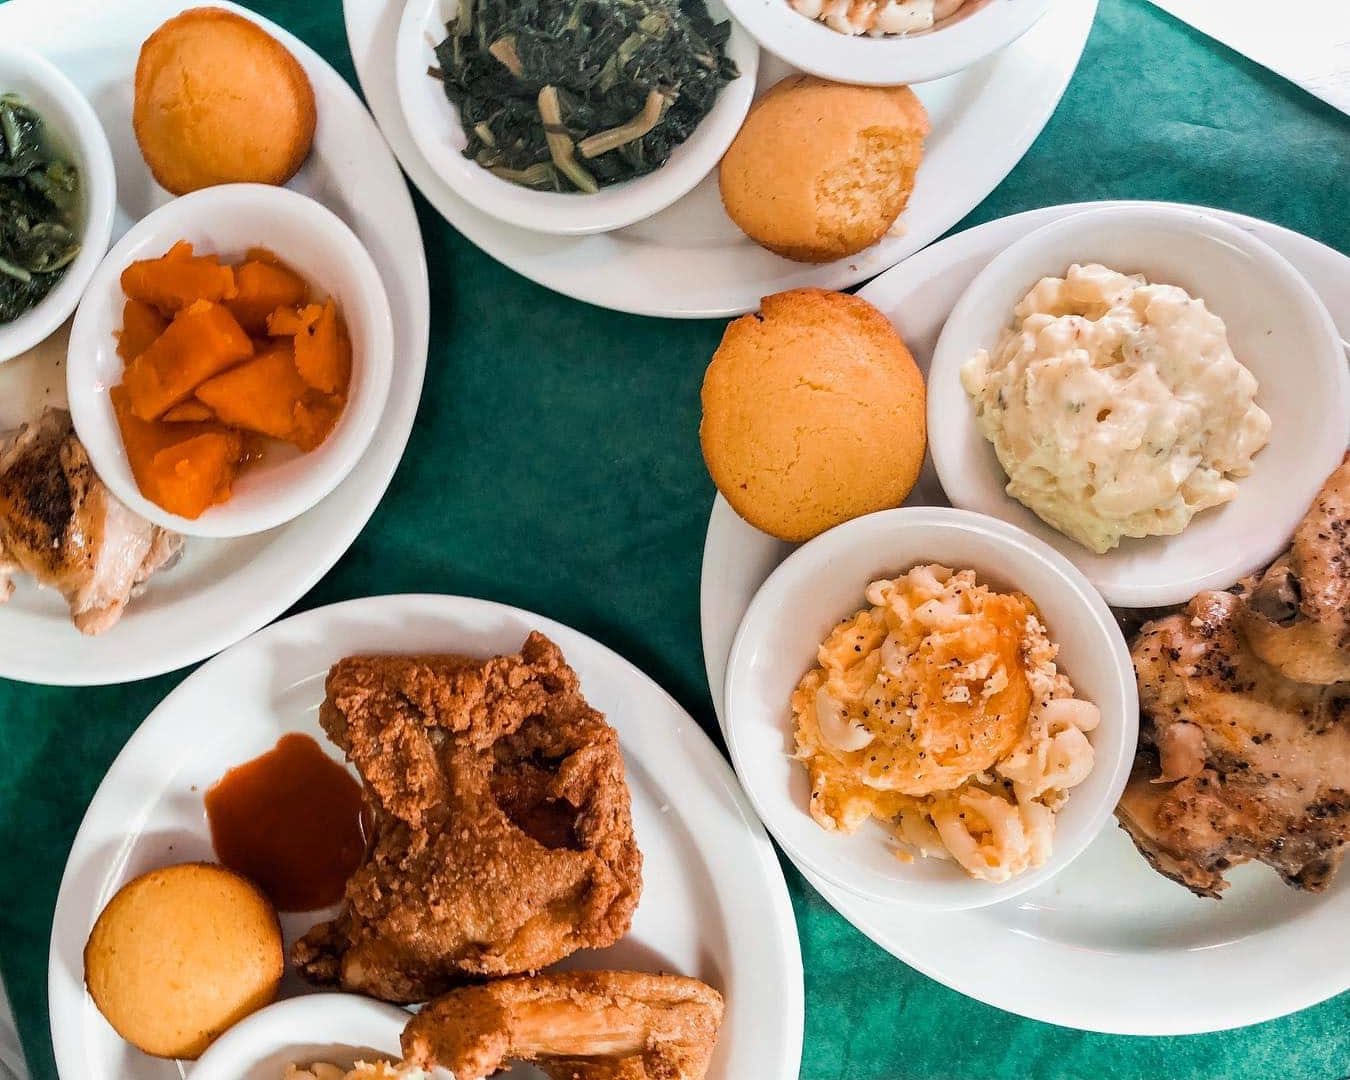 Memphis Black Restaurant Week 2021 Encourages Dining While Social